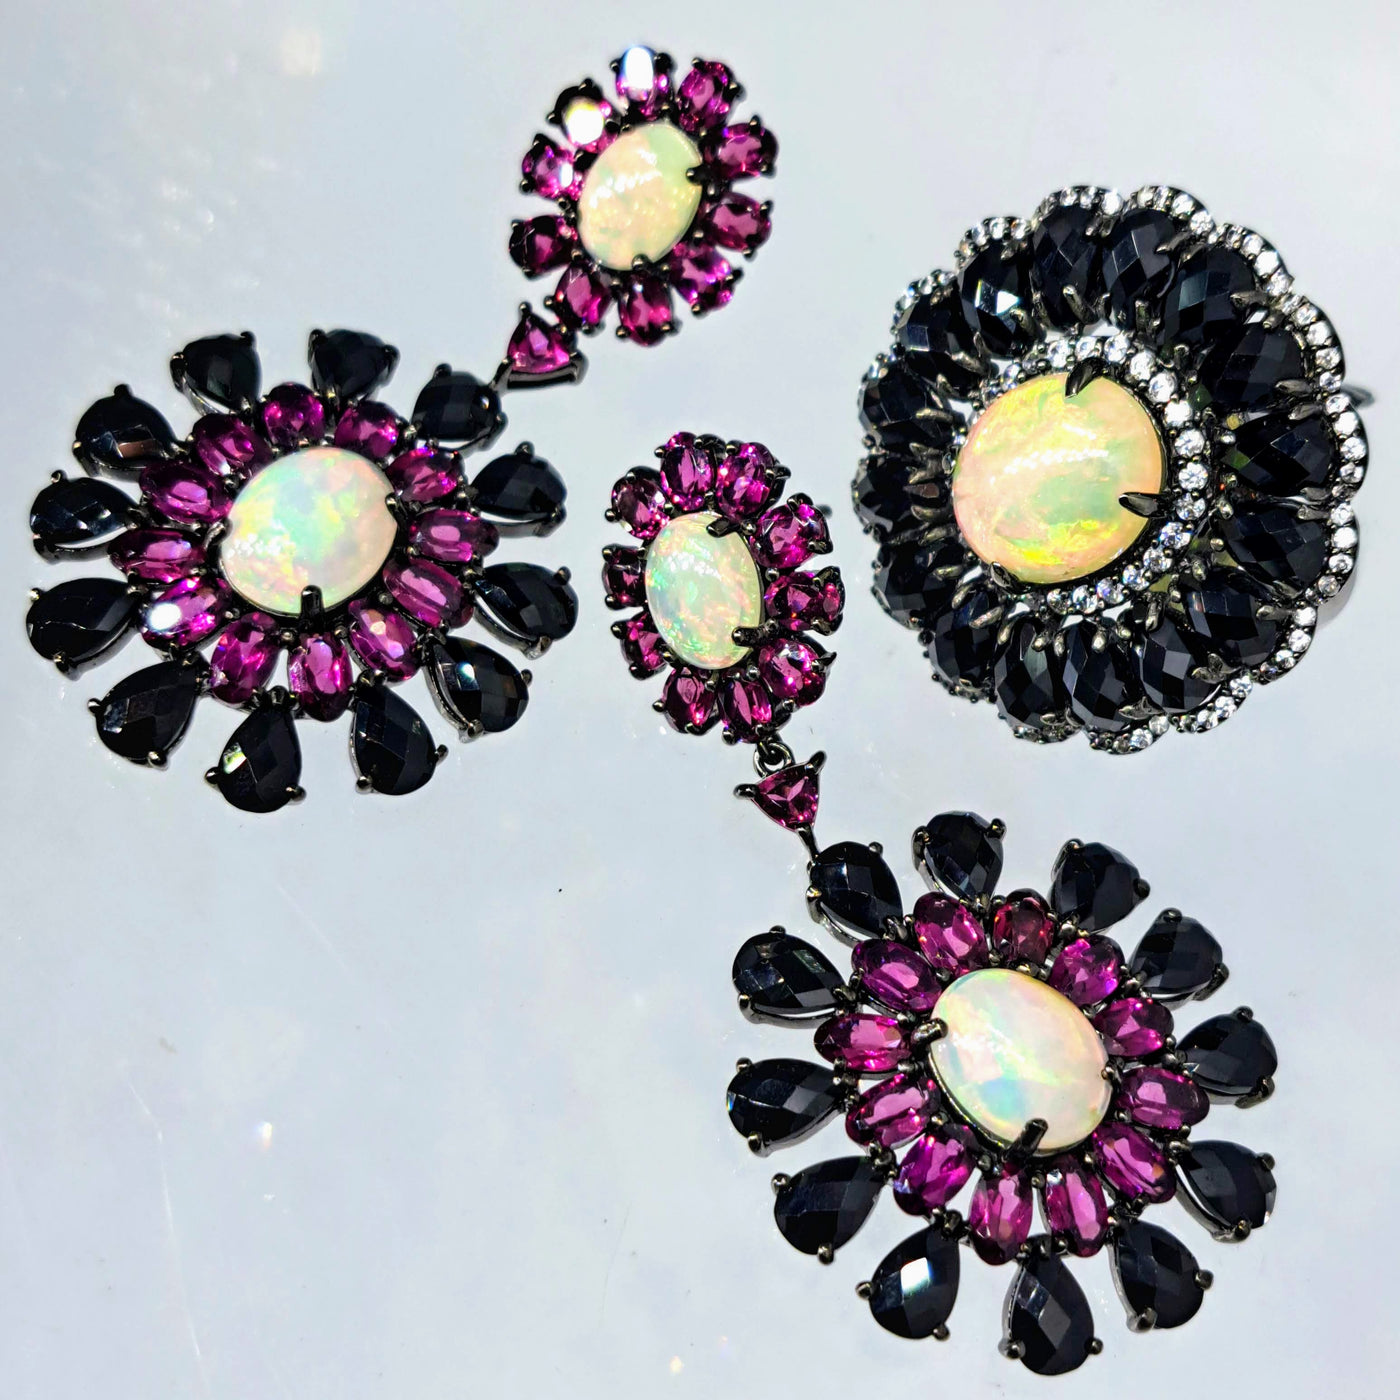 "Night Blooms" 2.25" Earrings - White Opal, Black Spinel, Rhodolite Garnet, Black Sterling